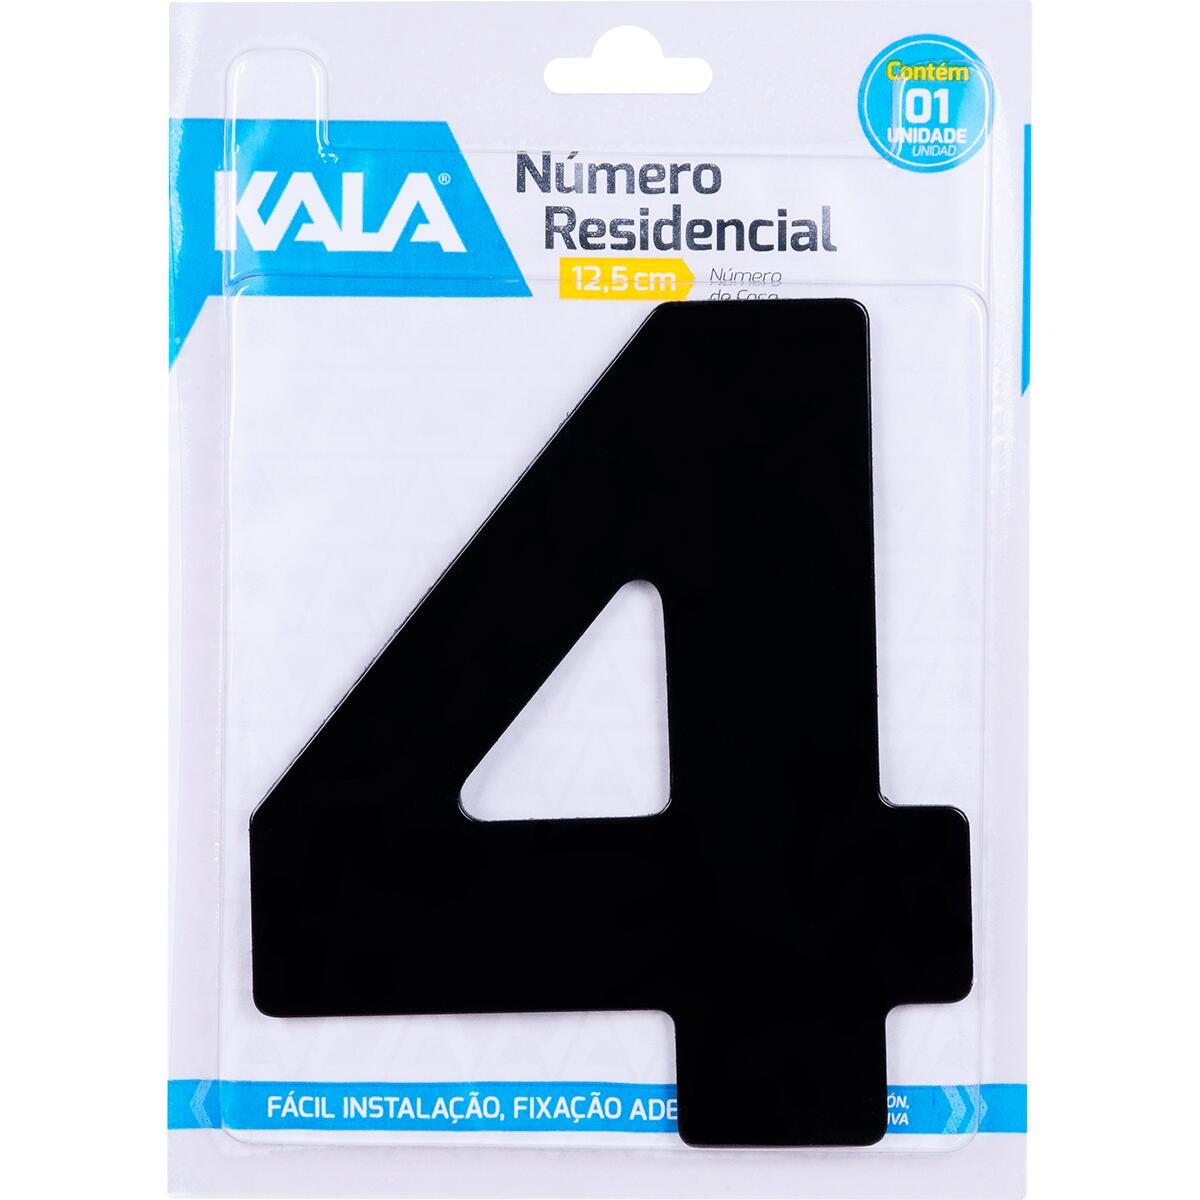 Número Residencial N°4 Preto 12,5Cm Kala